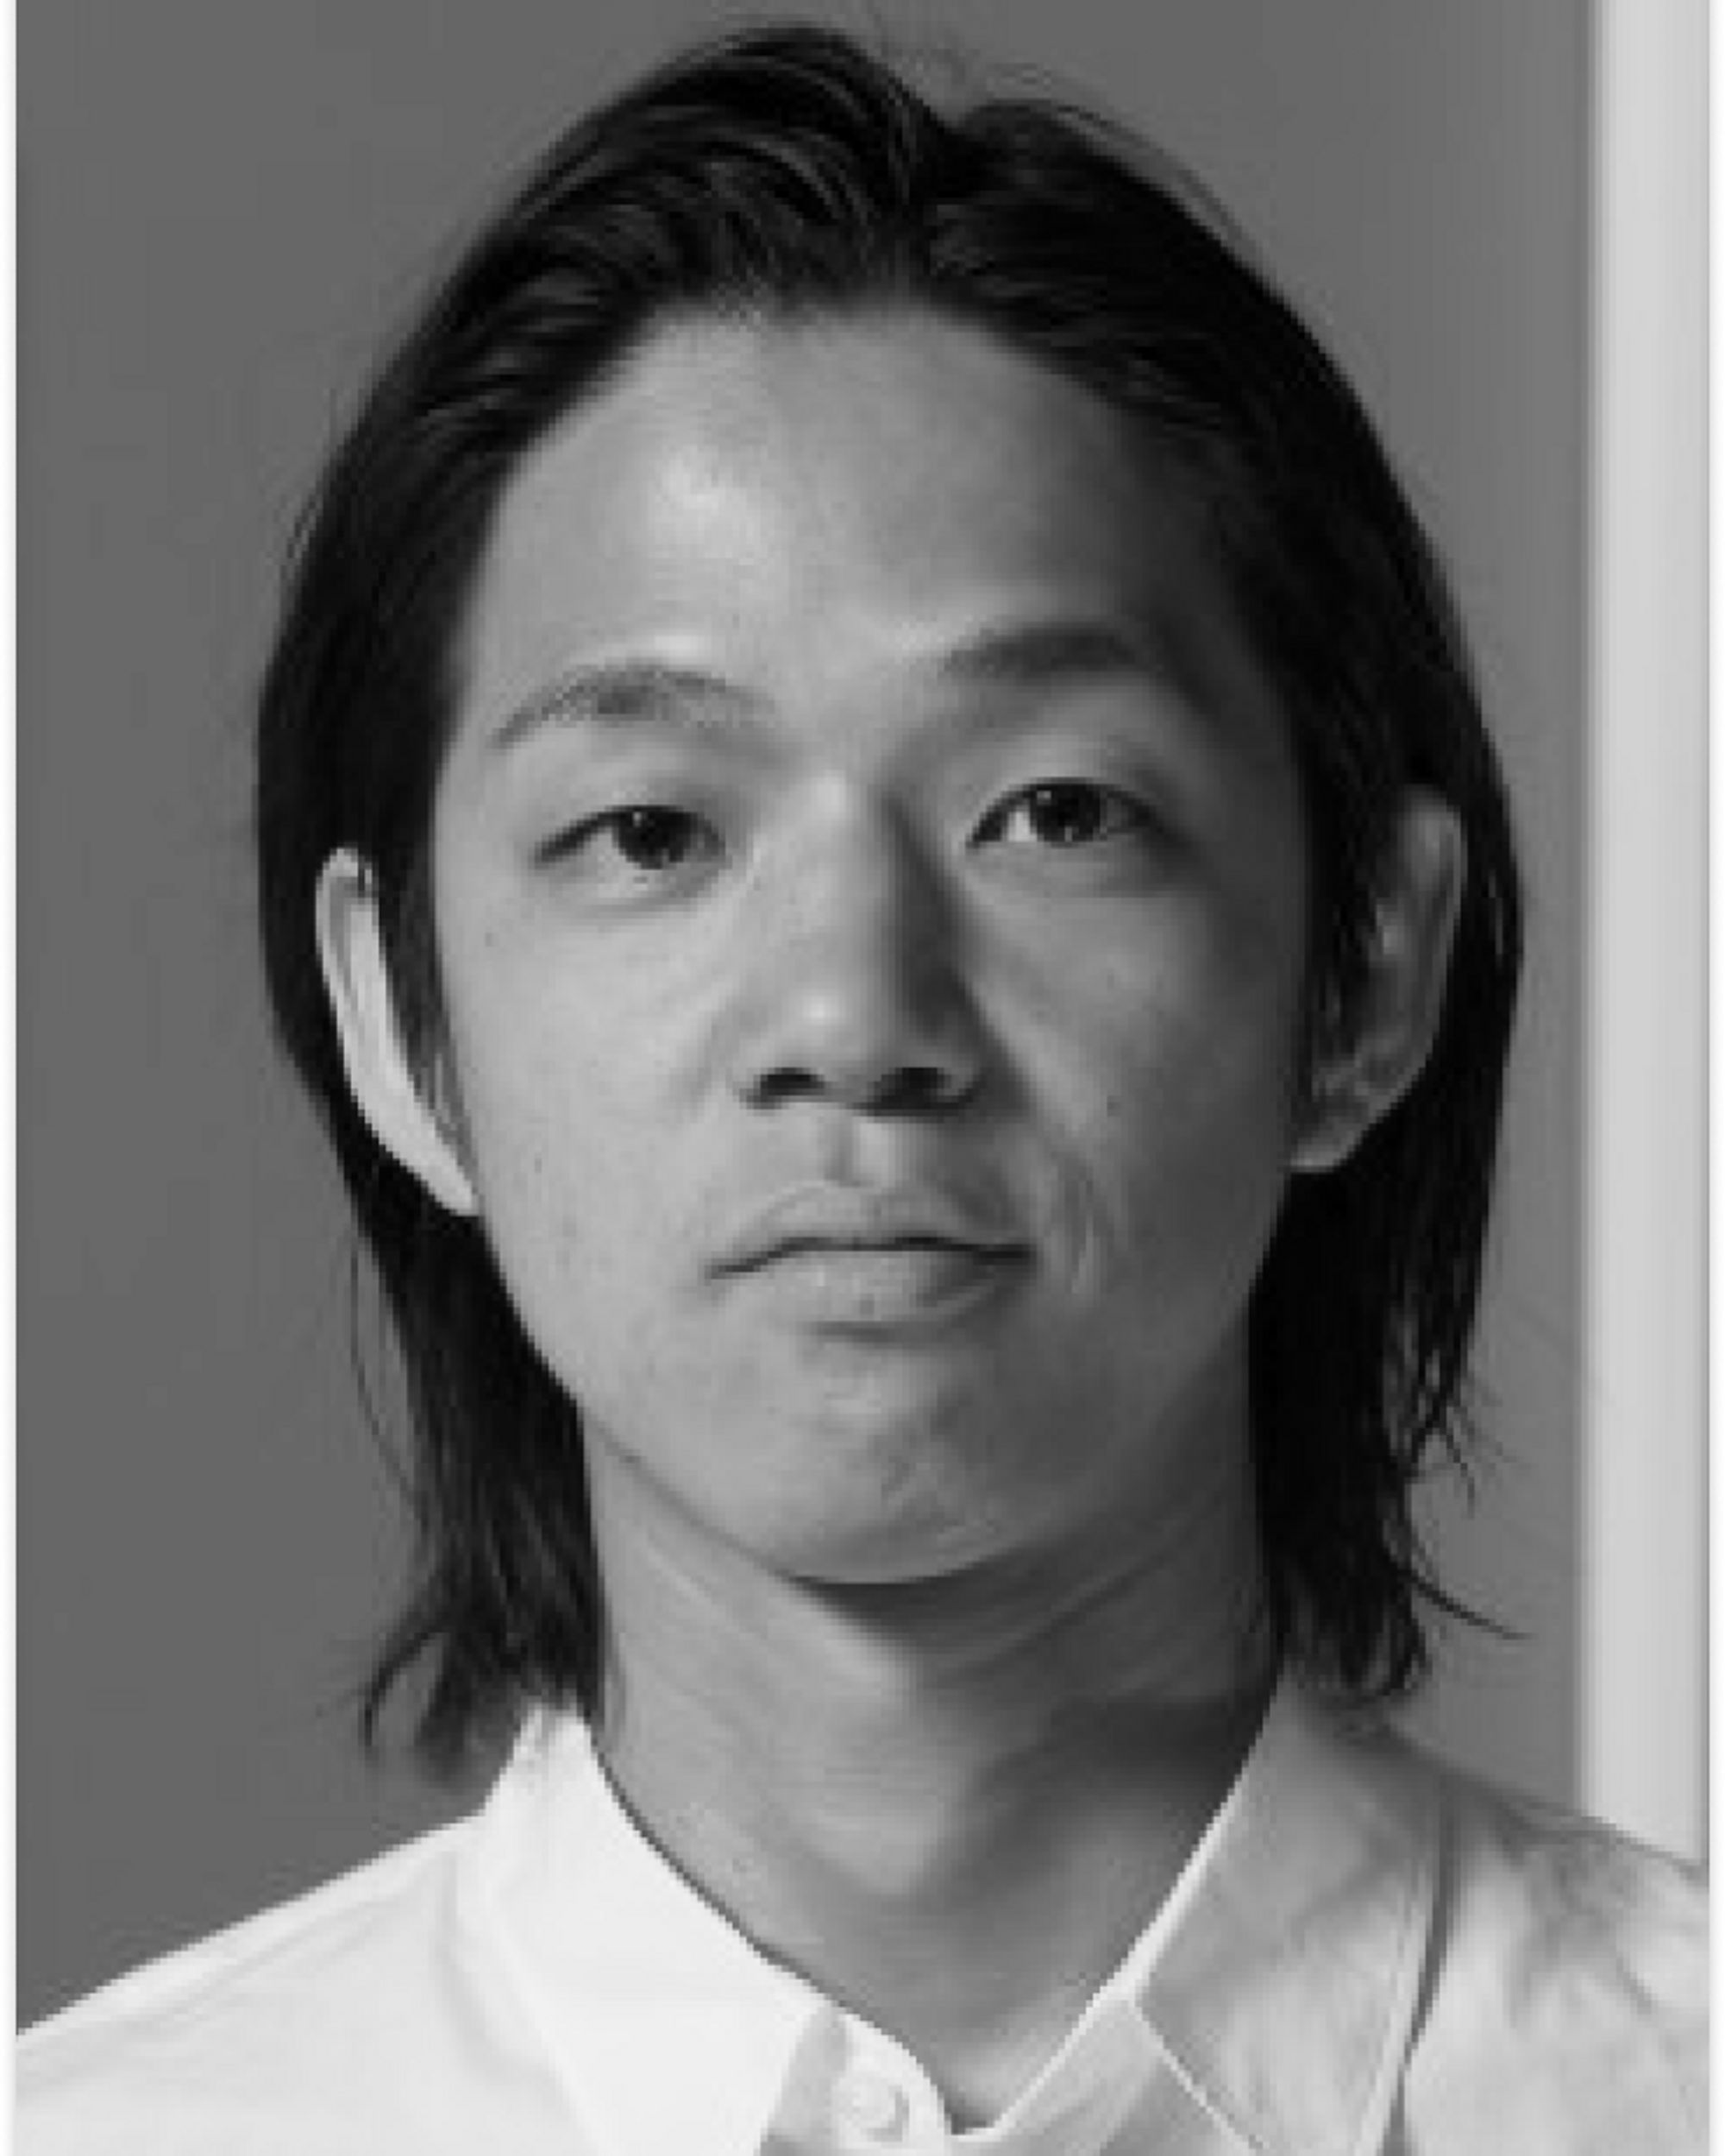 Motoyuki Daifu's portrait